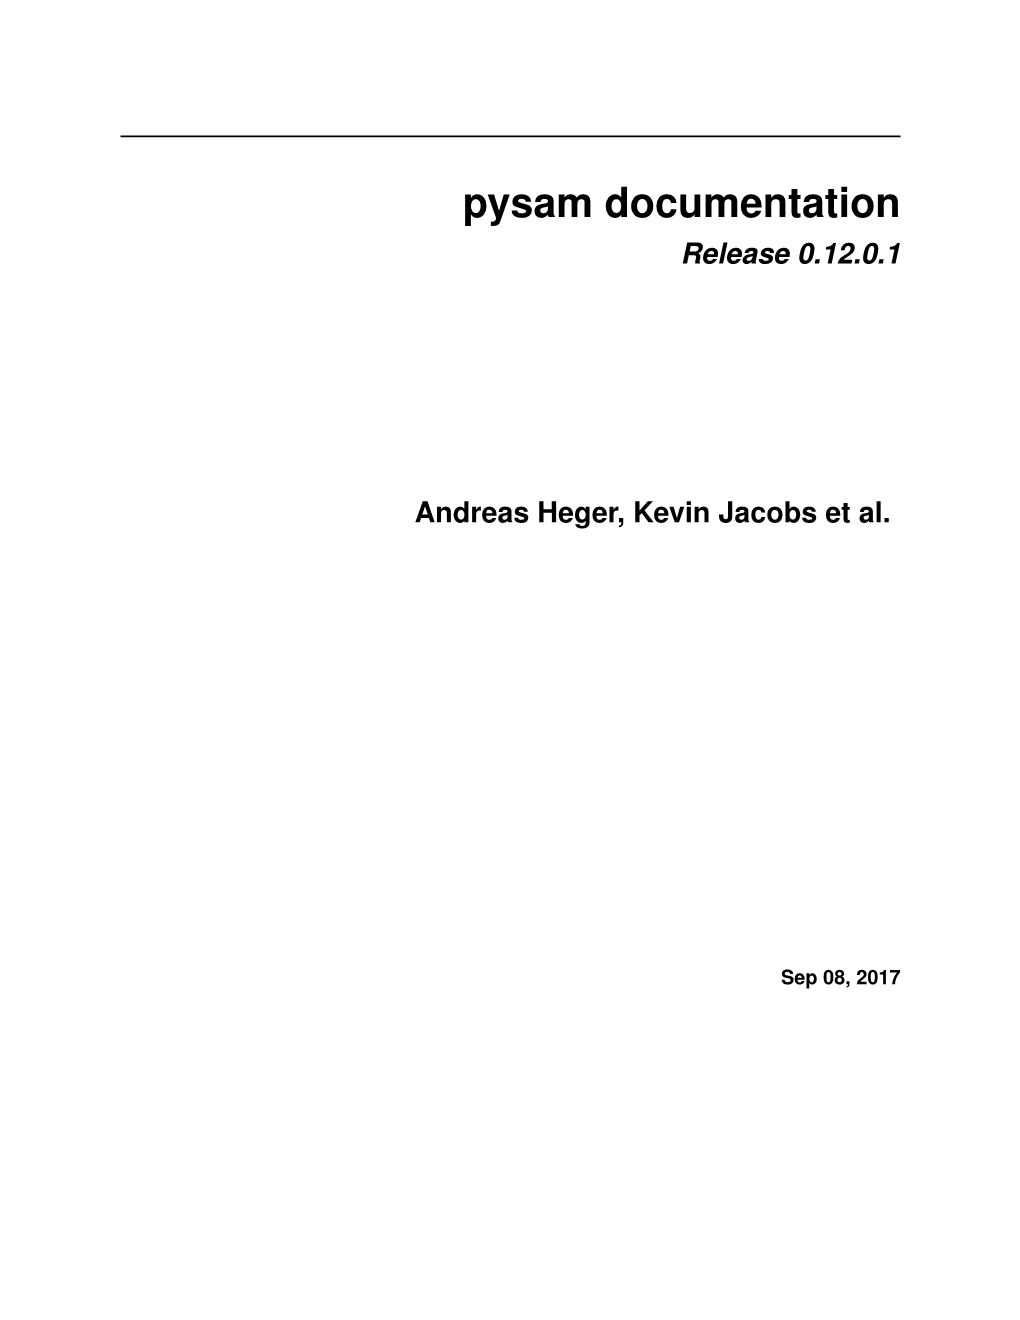 Pysam Documentation Release 0.12.0.1